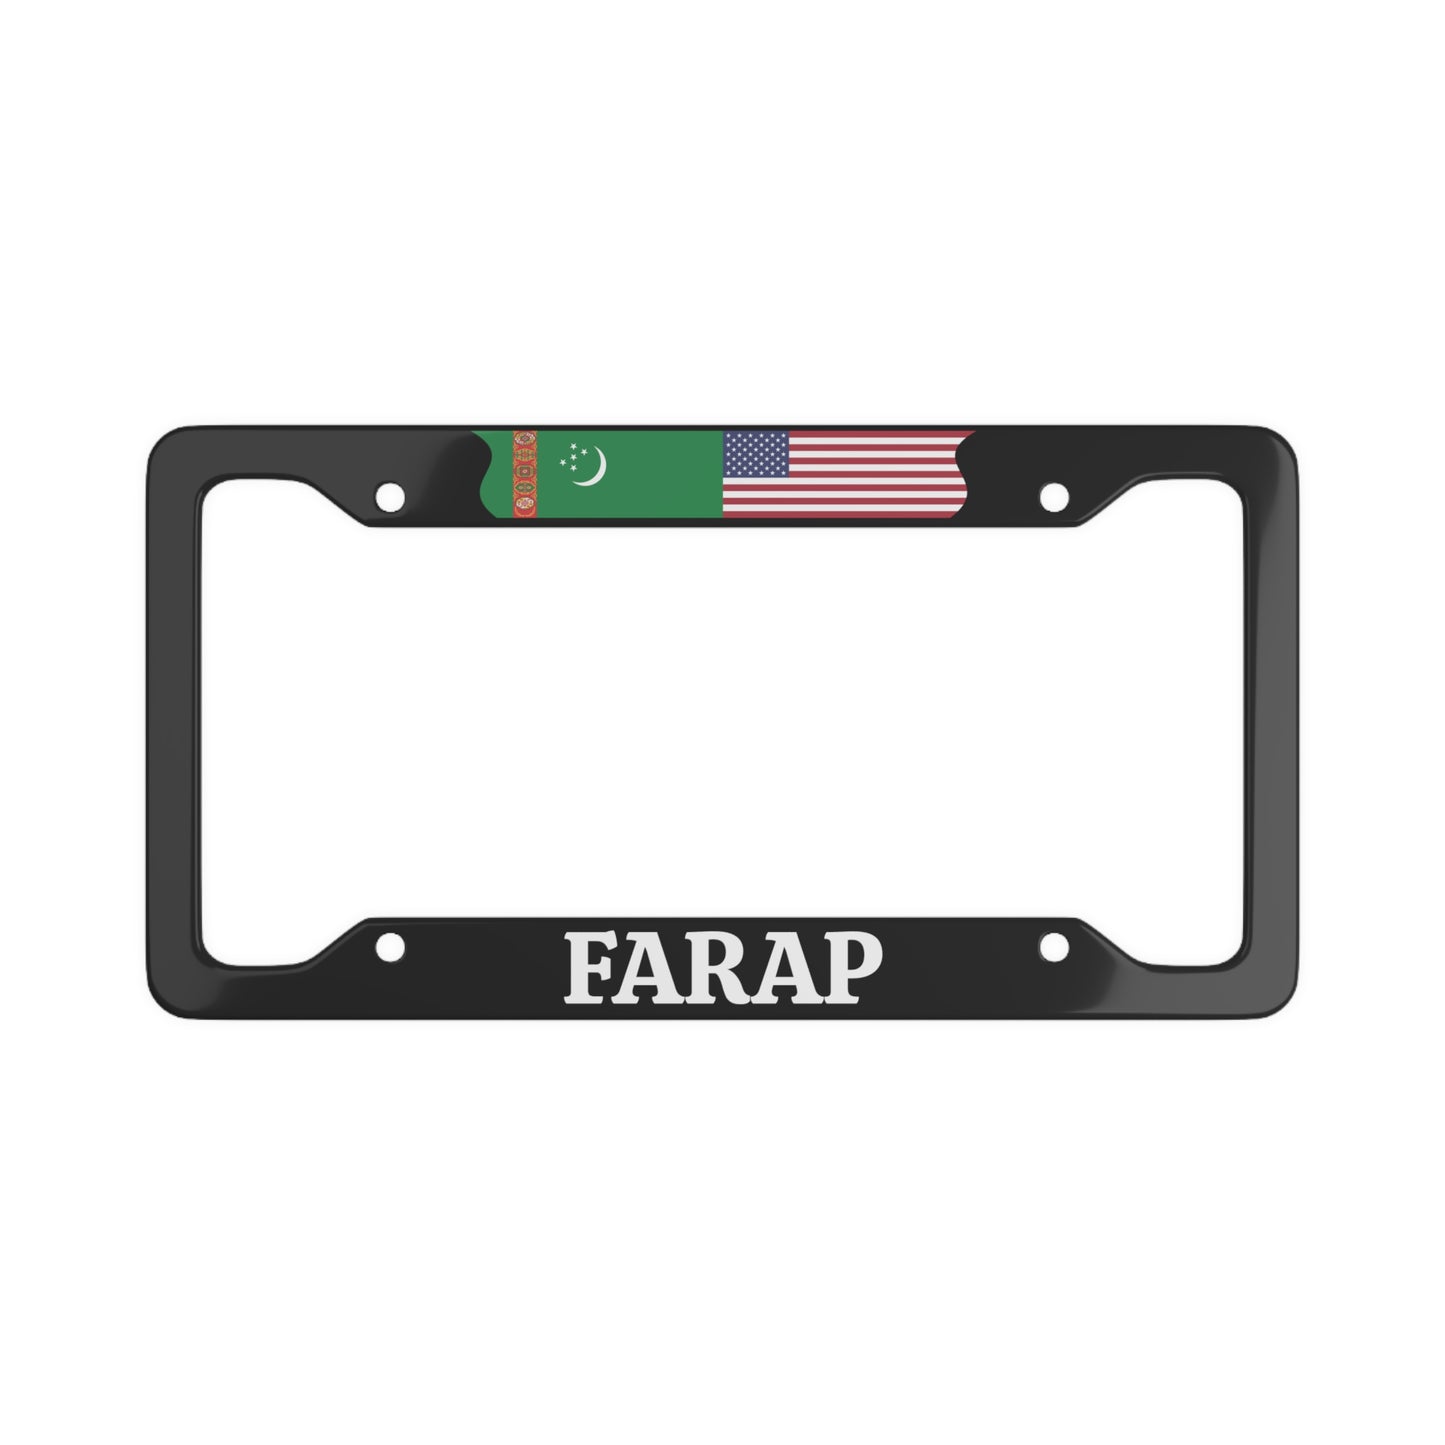 Farap Turkmenistan  License Plate Frame